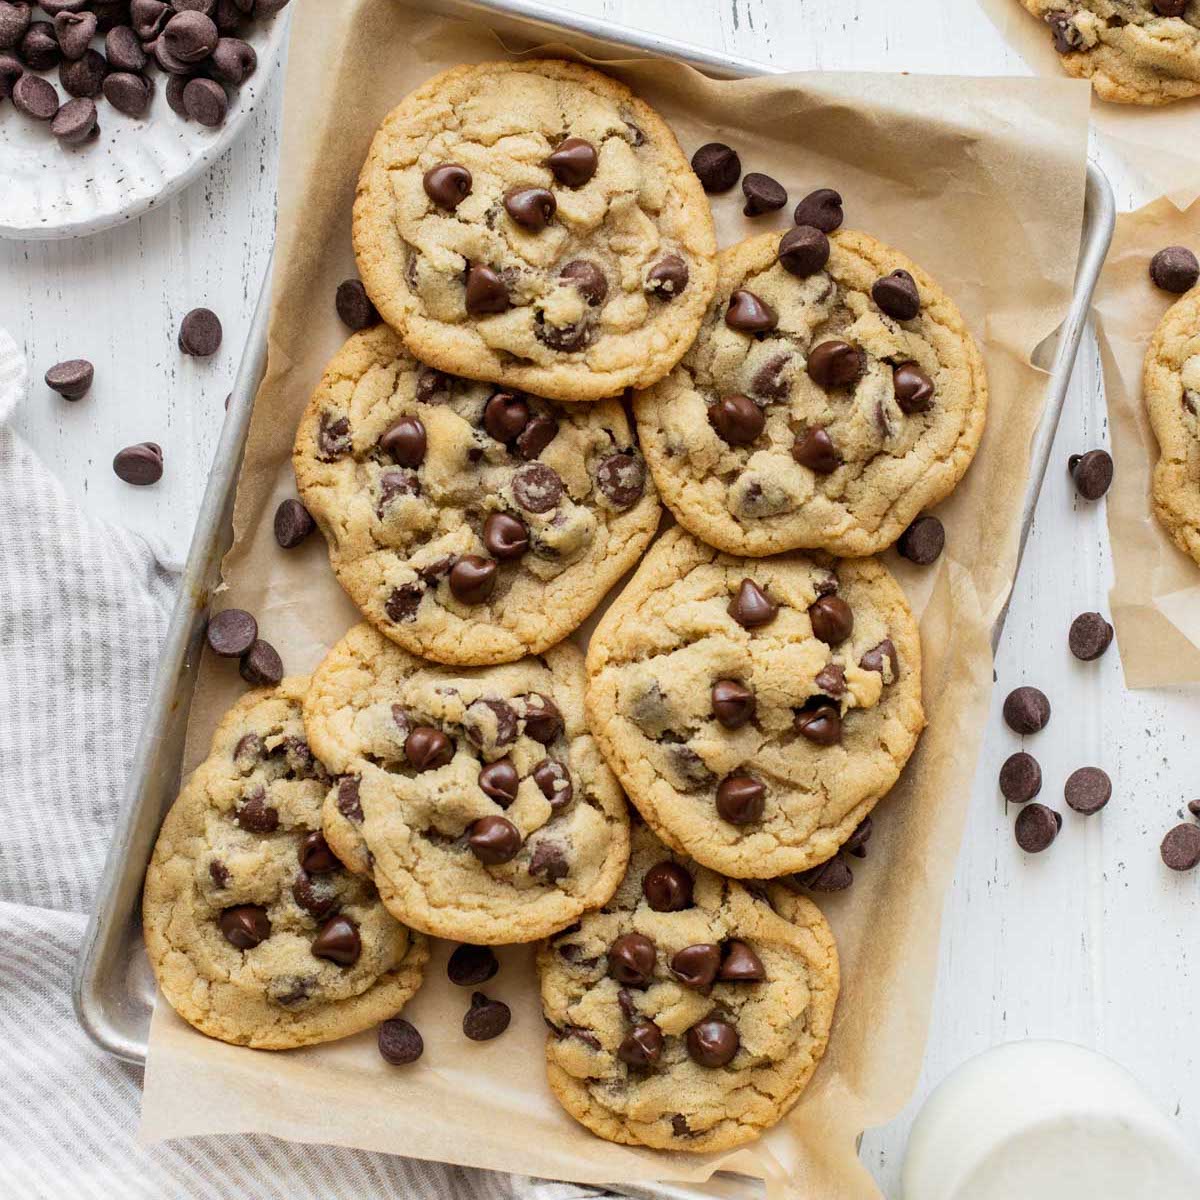 https://www.livewellbakeoften.com/wp-content/uploads/2020/08/Small-Batch-Chocolate-Chip-Cookies-4s.jpg